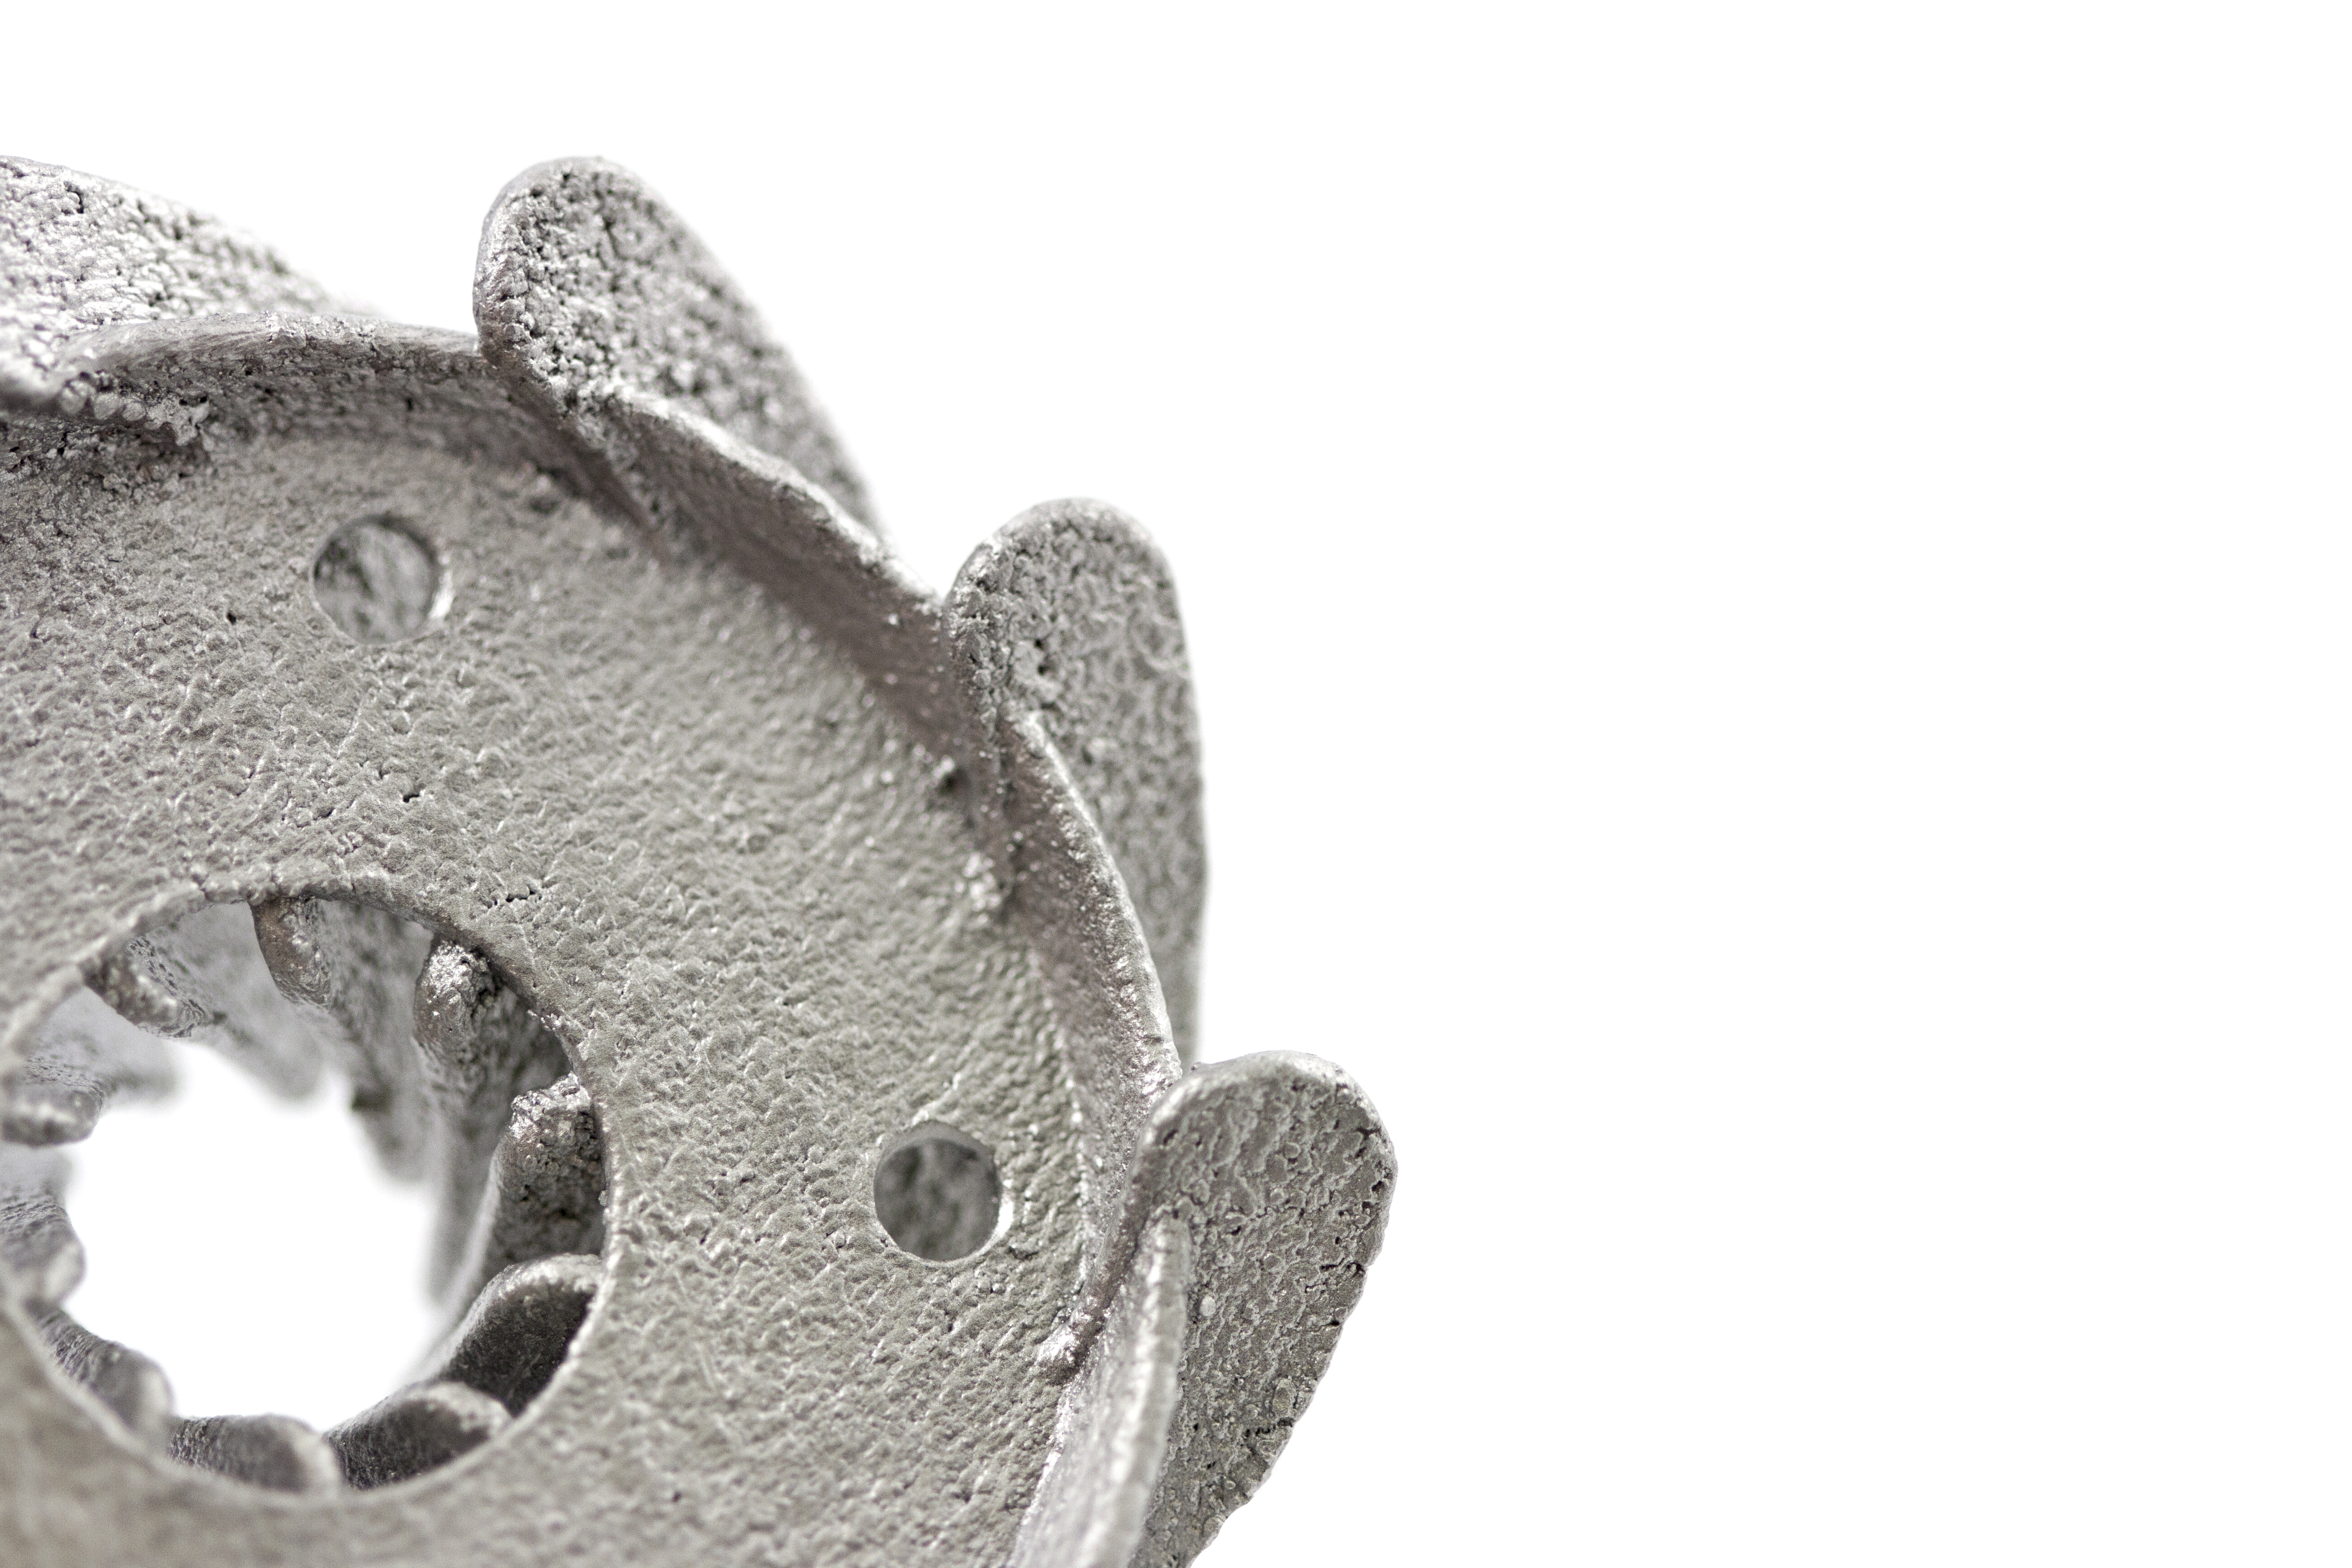 imaterialise aluminum 3d printing heat sink by bert de niel  002